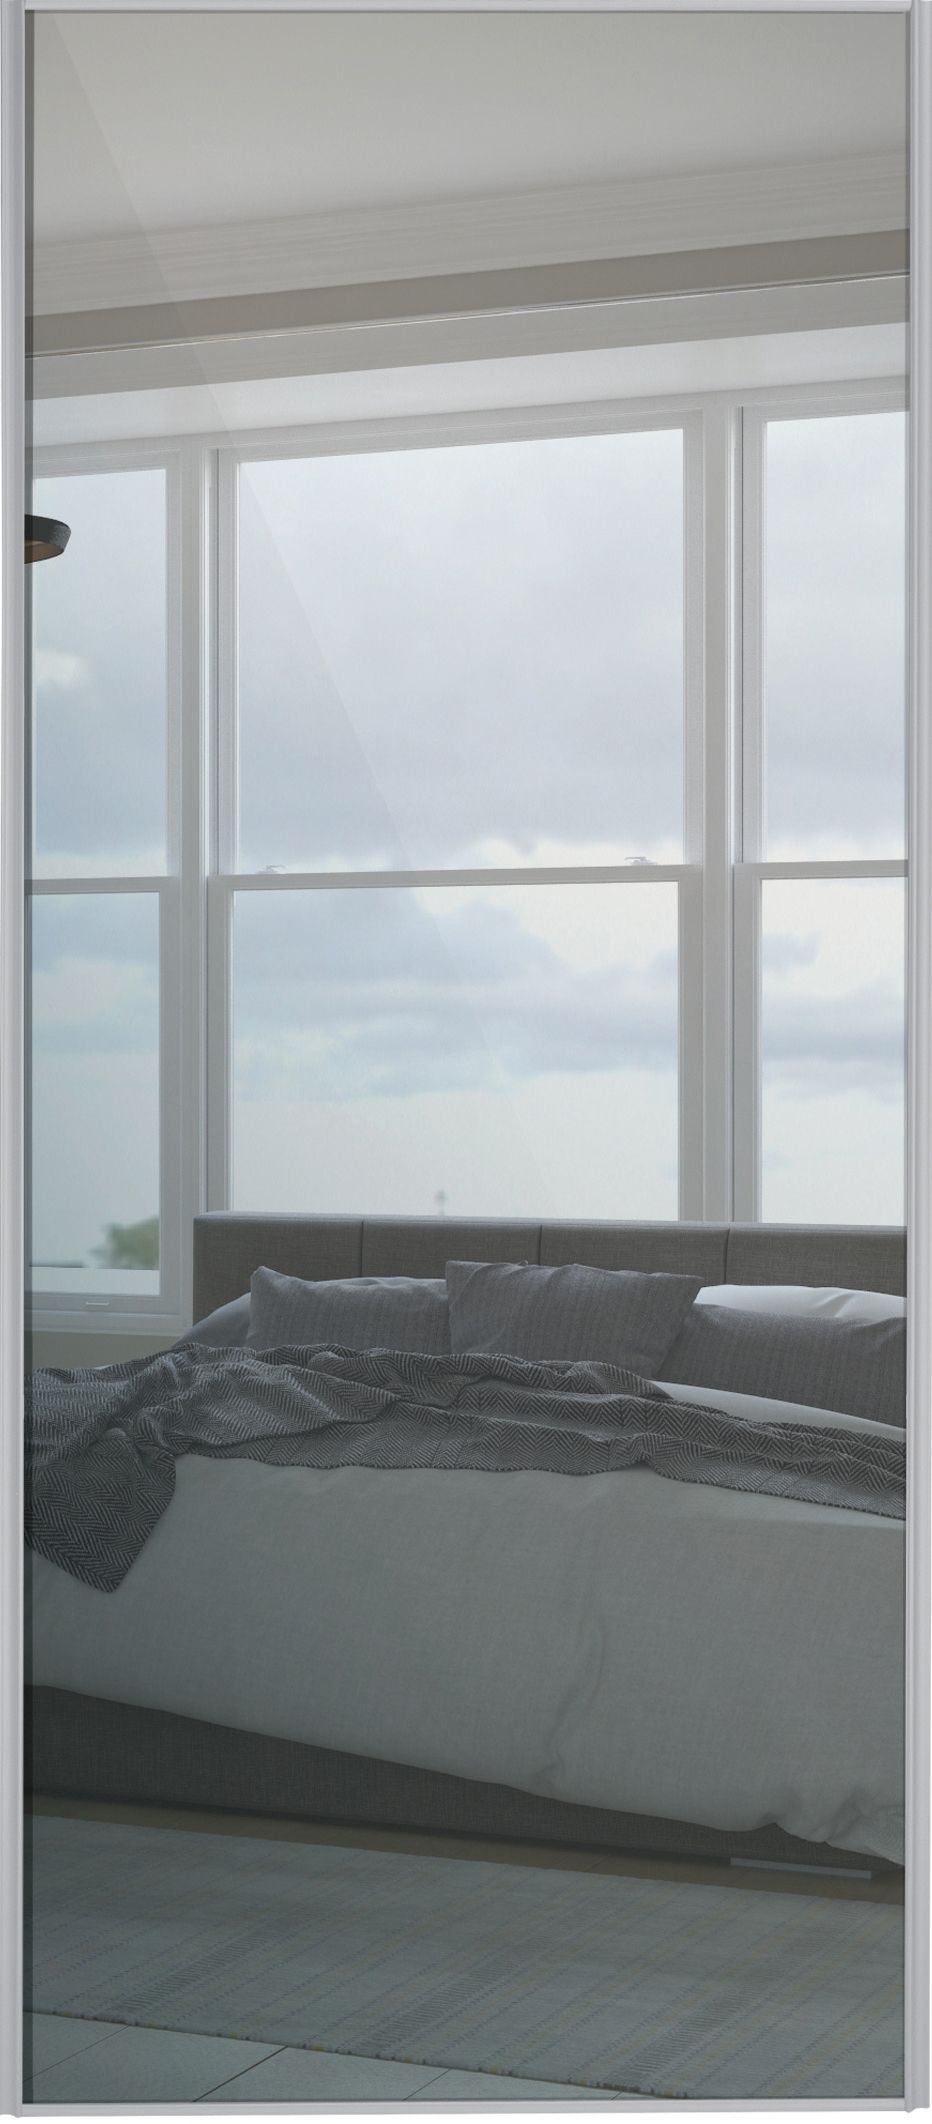 Image of Spacepro Sliding Wardrobe Door Silver Framed Single Panel Mirror - 2220 x 762mm